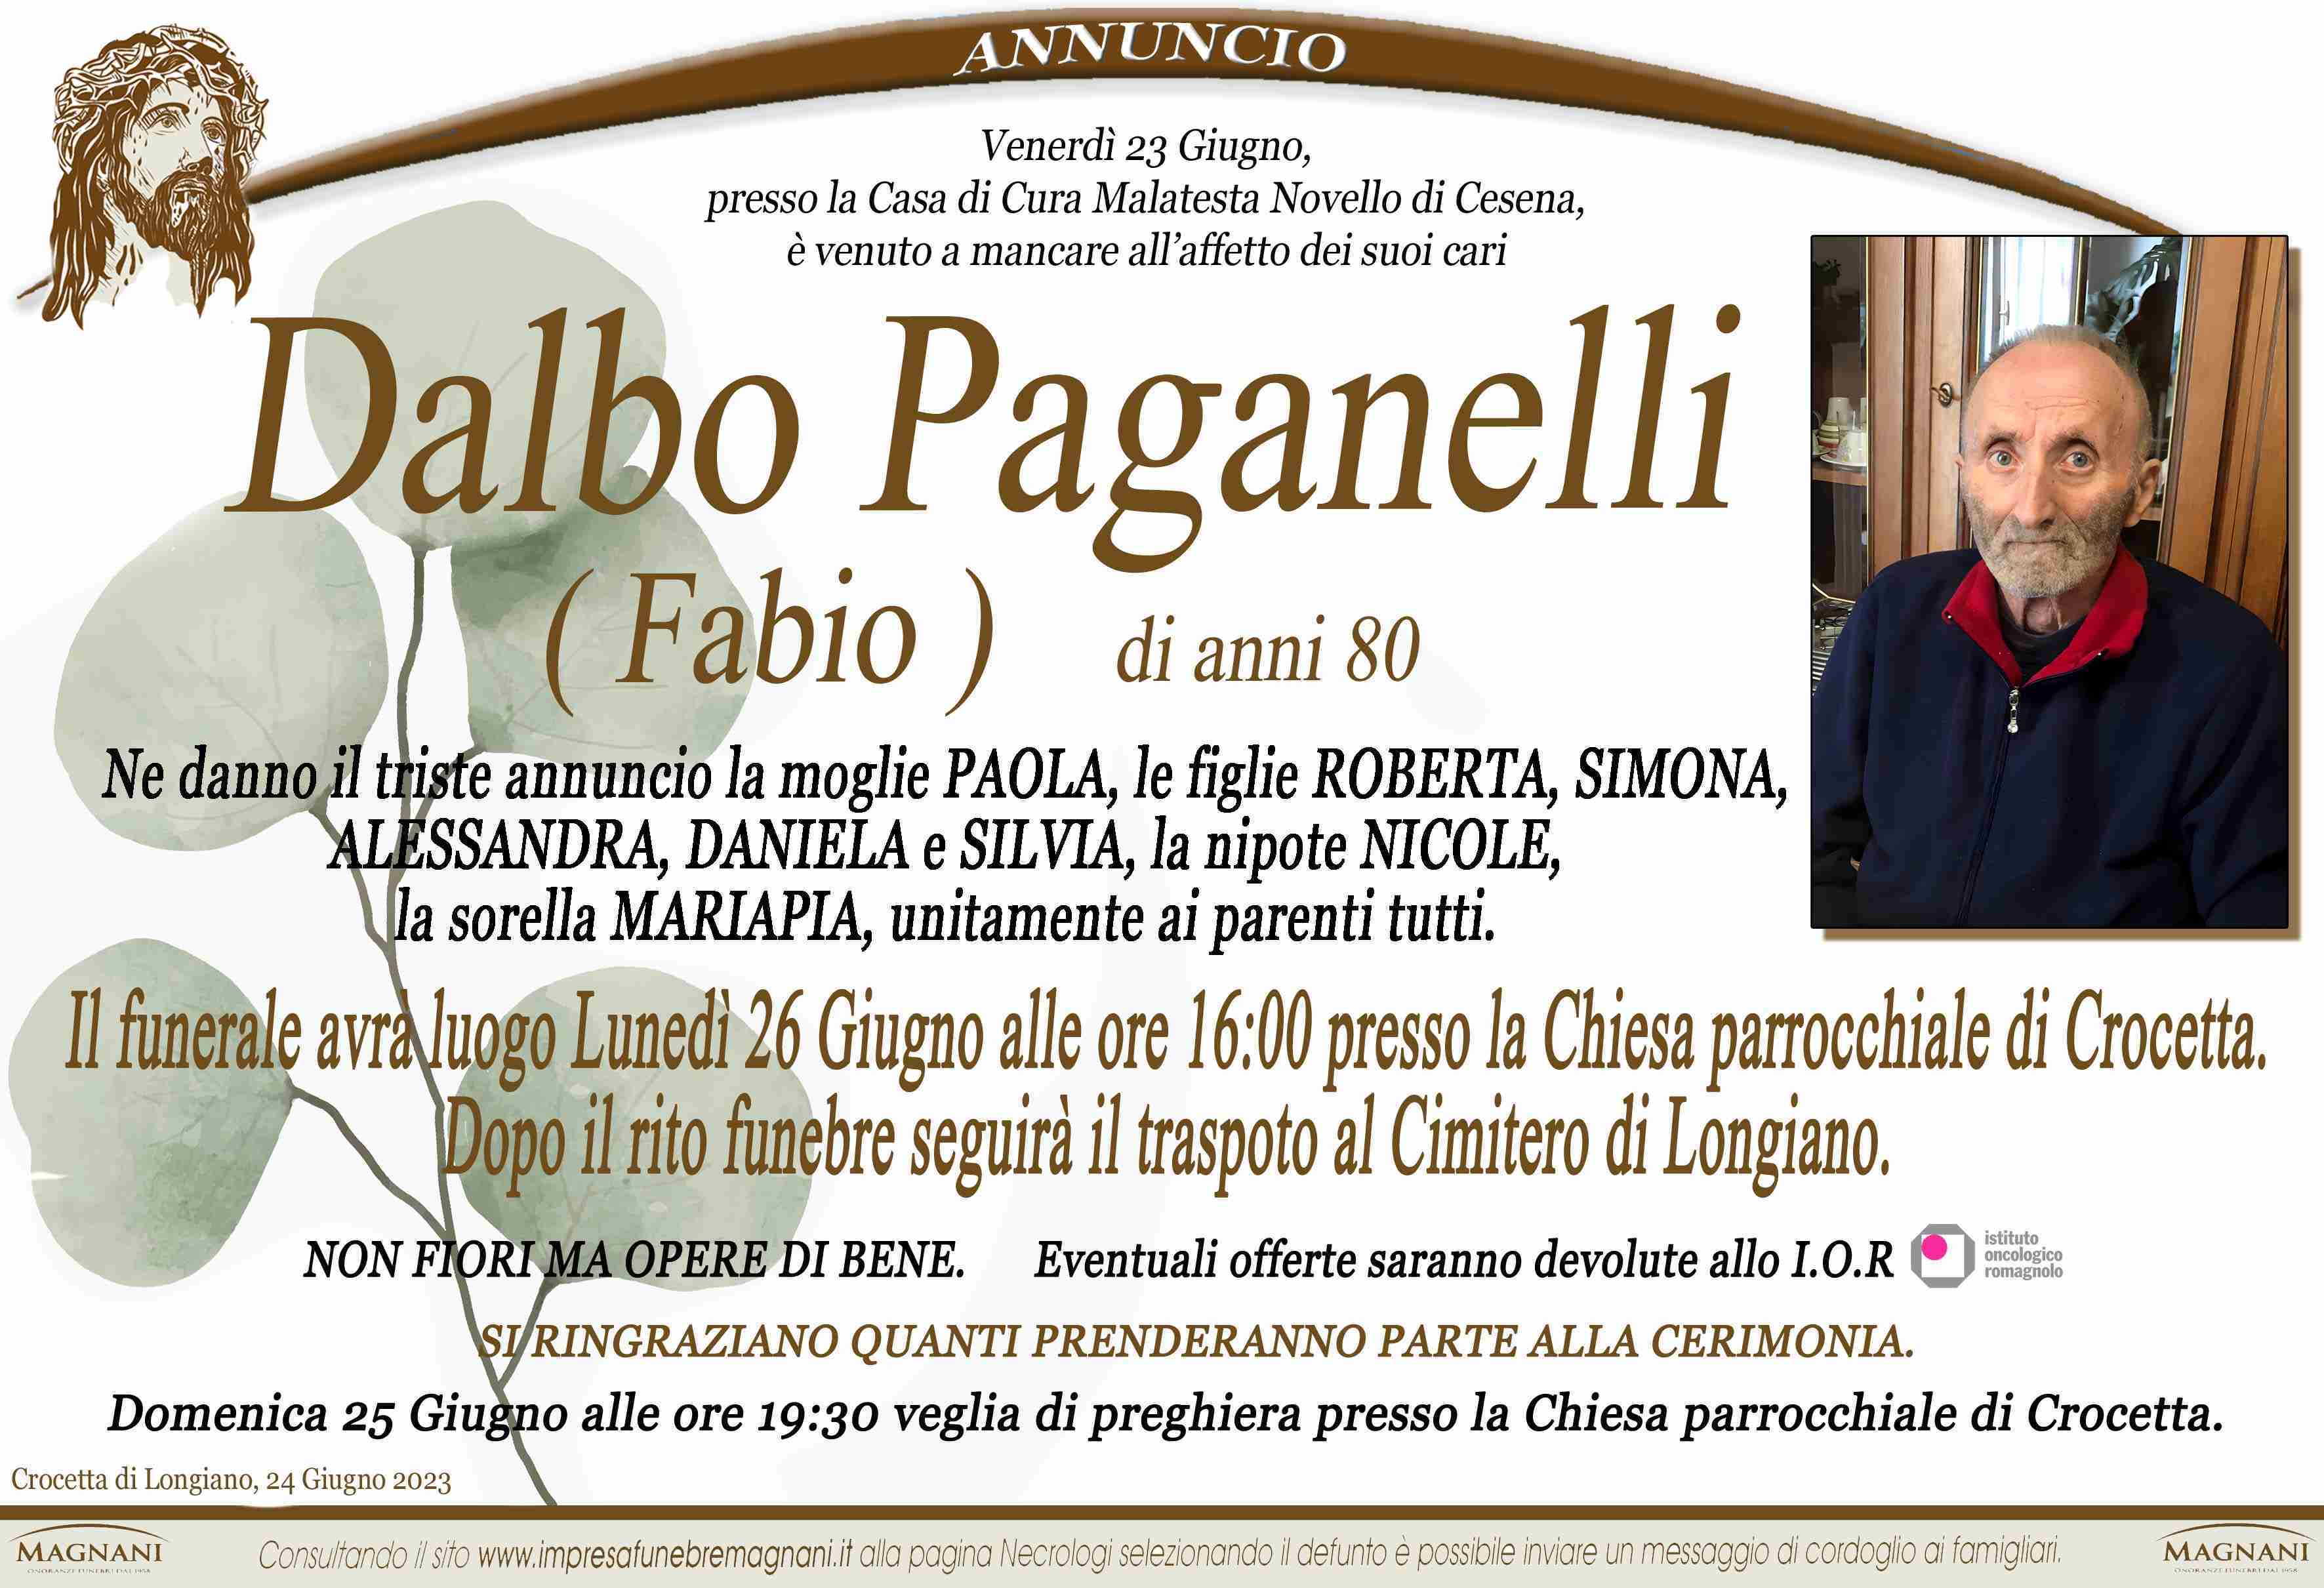 Dalbo Paganelli